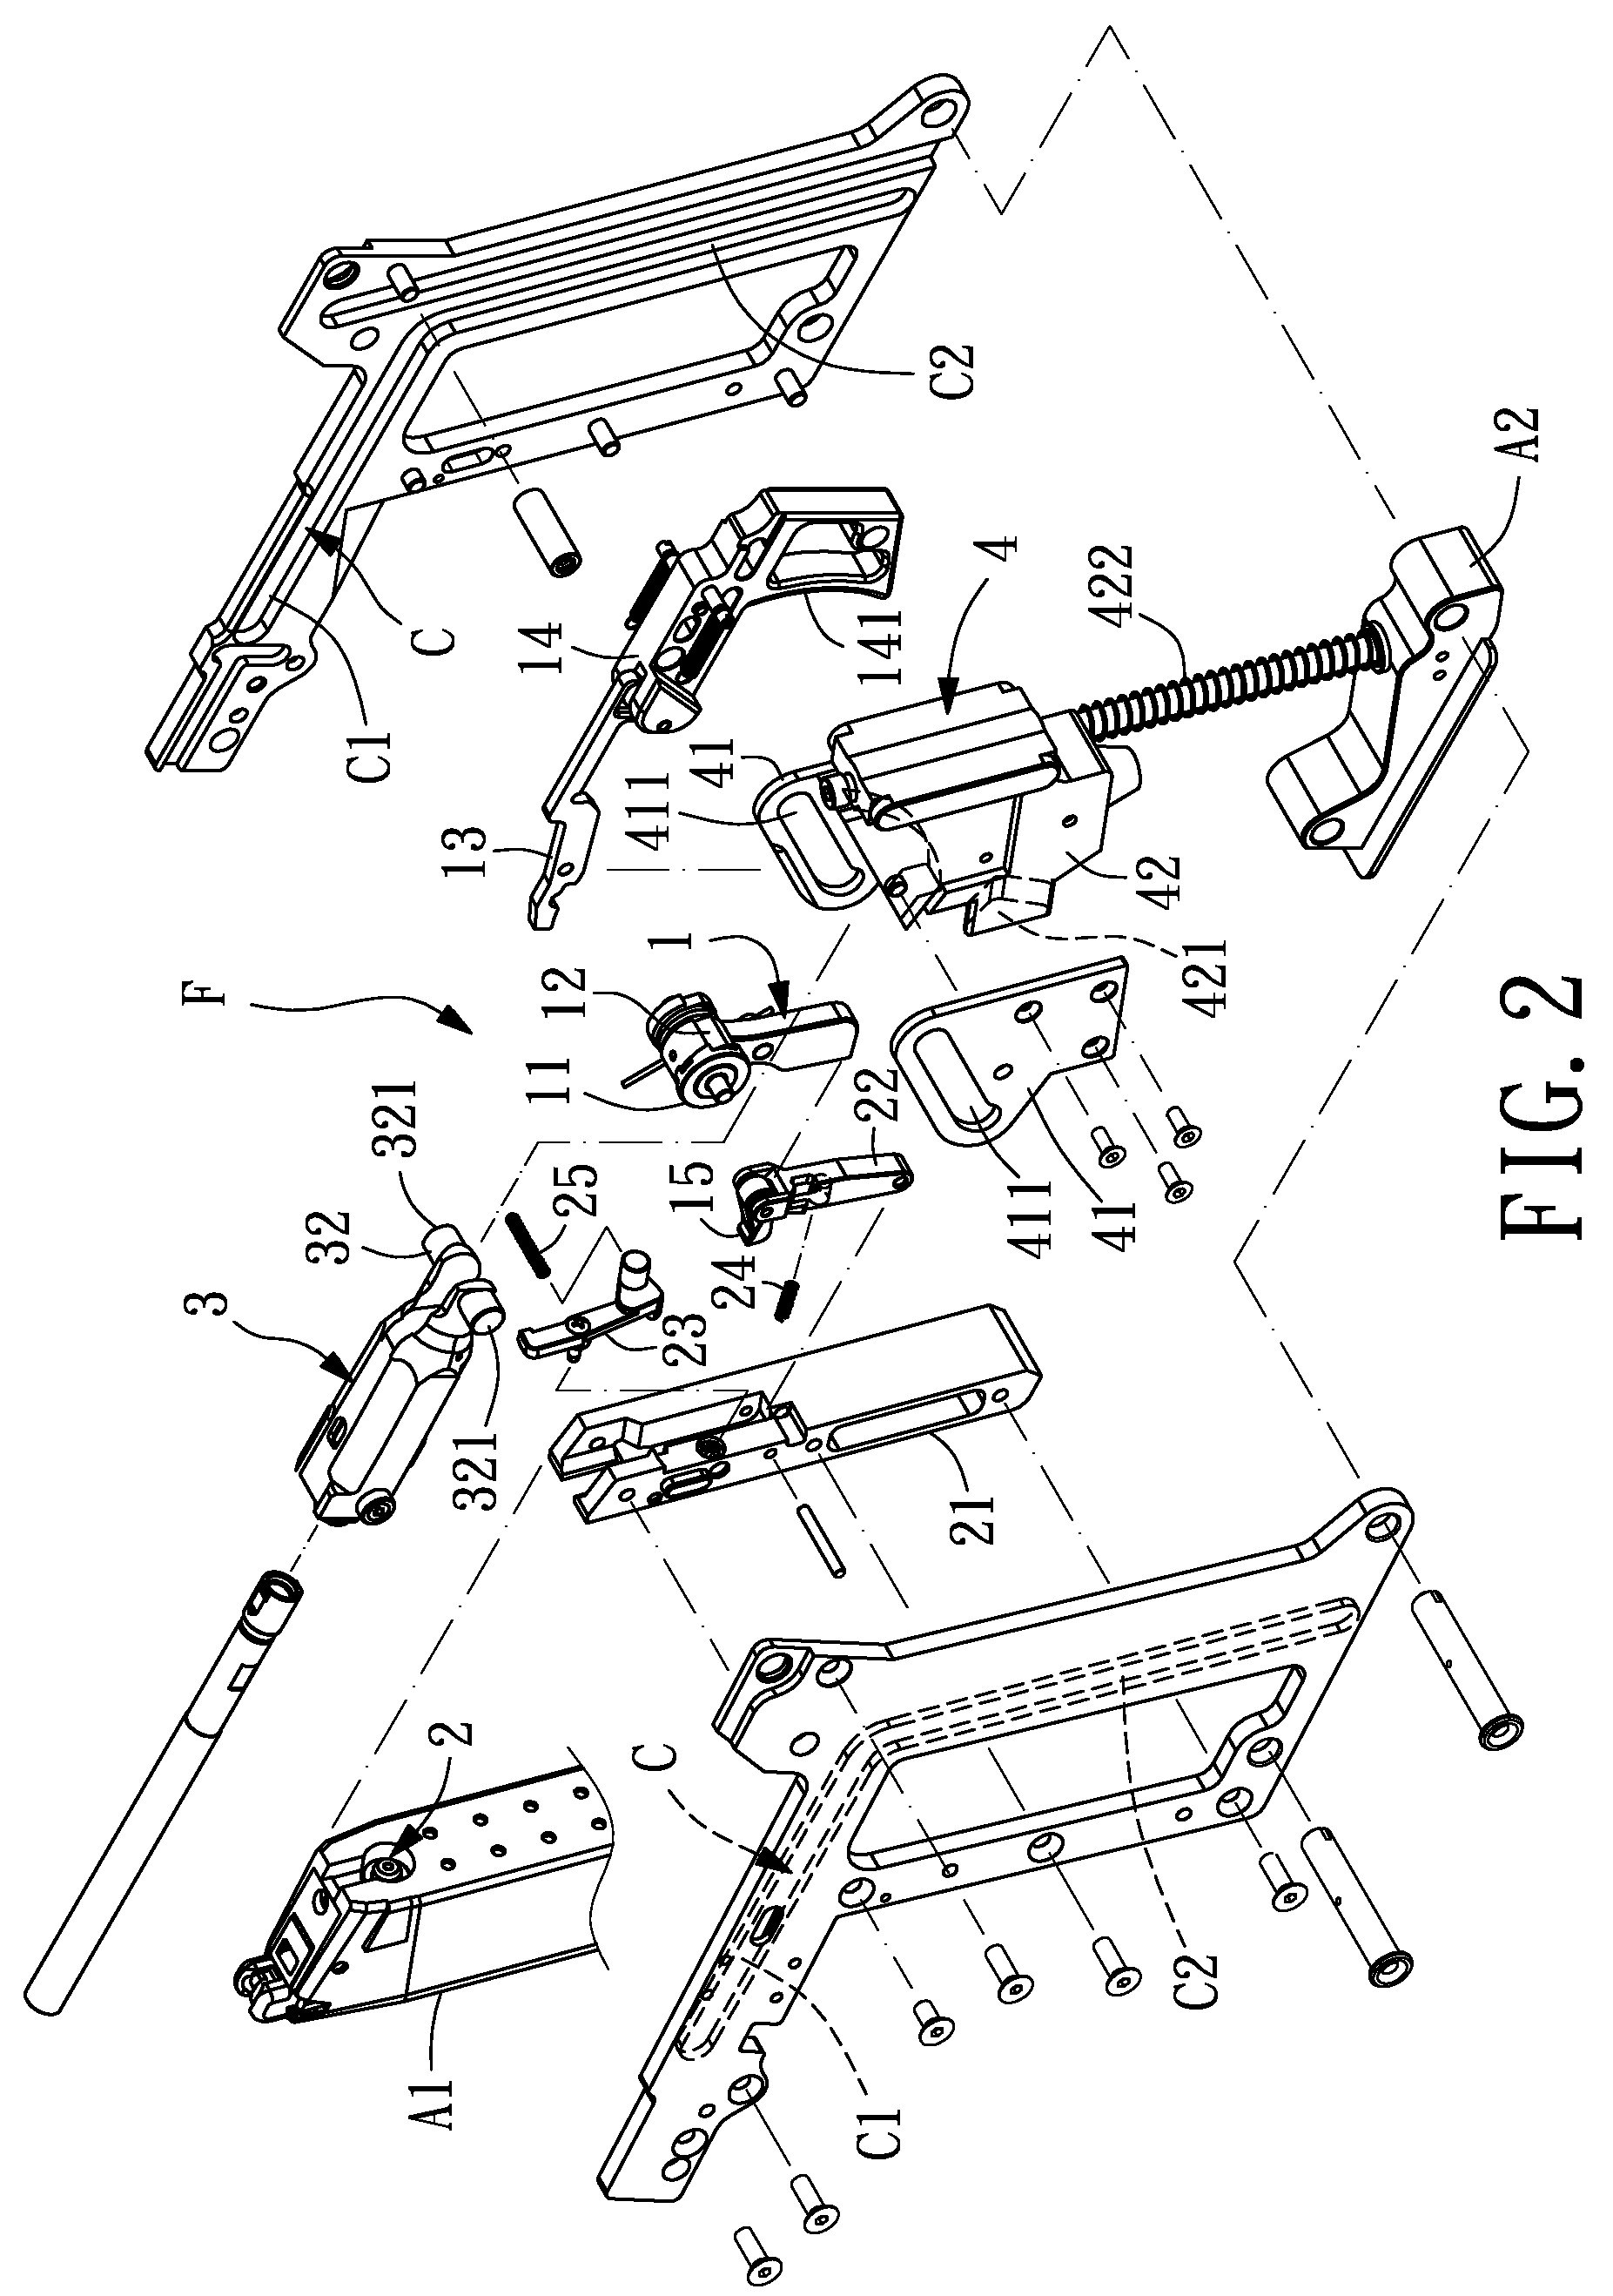 Firing linkage mechanism for toy submachine gun